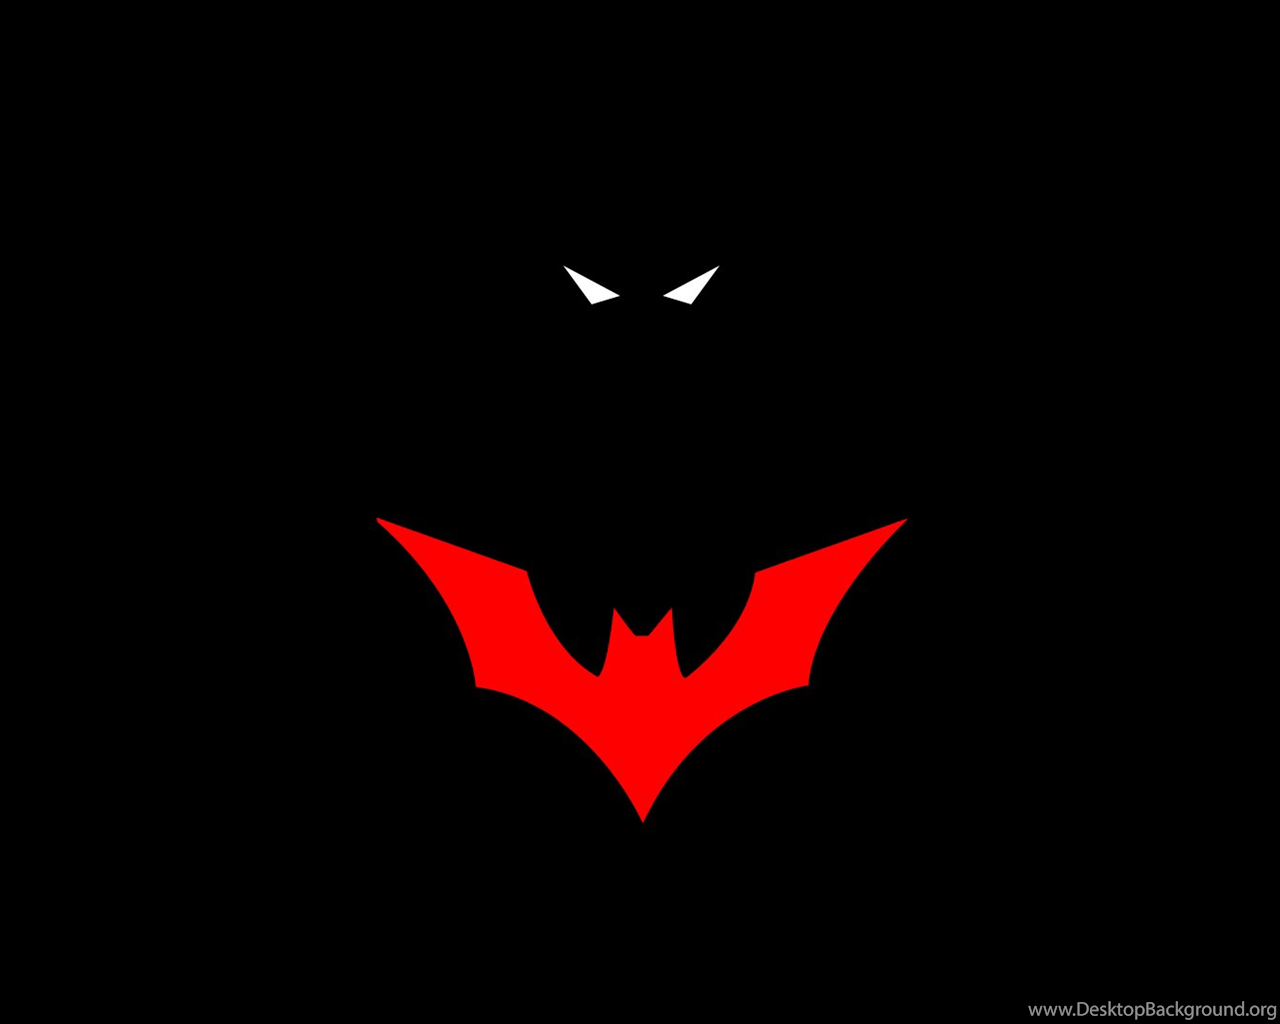 Batman logo wallpaper for deskp Desktop Background